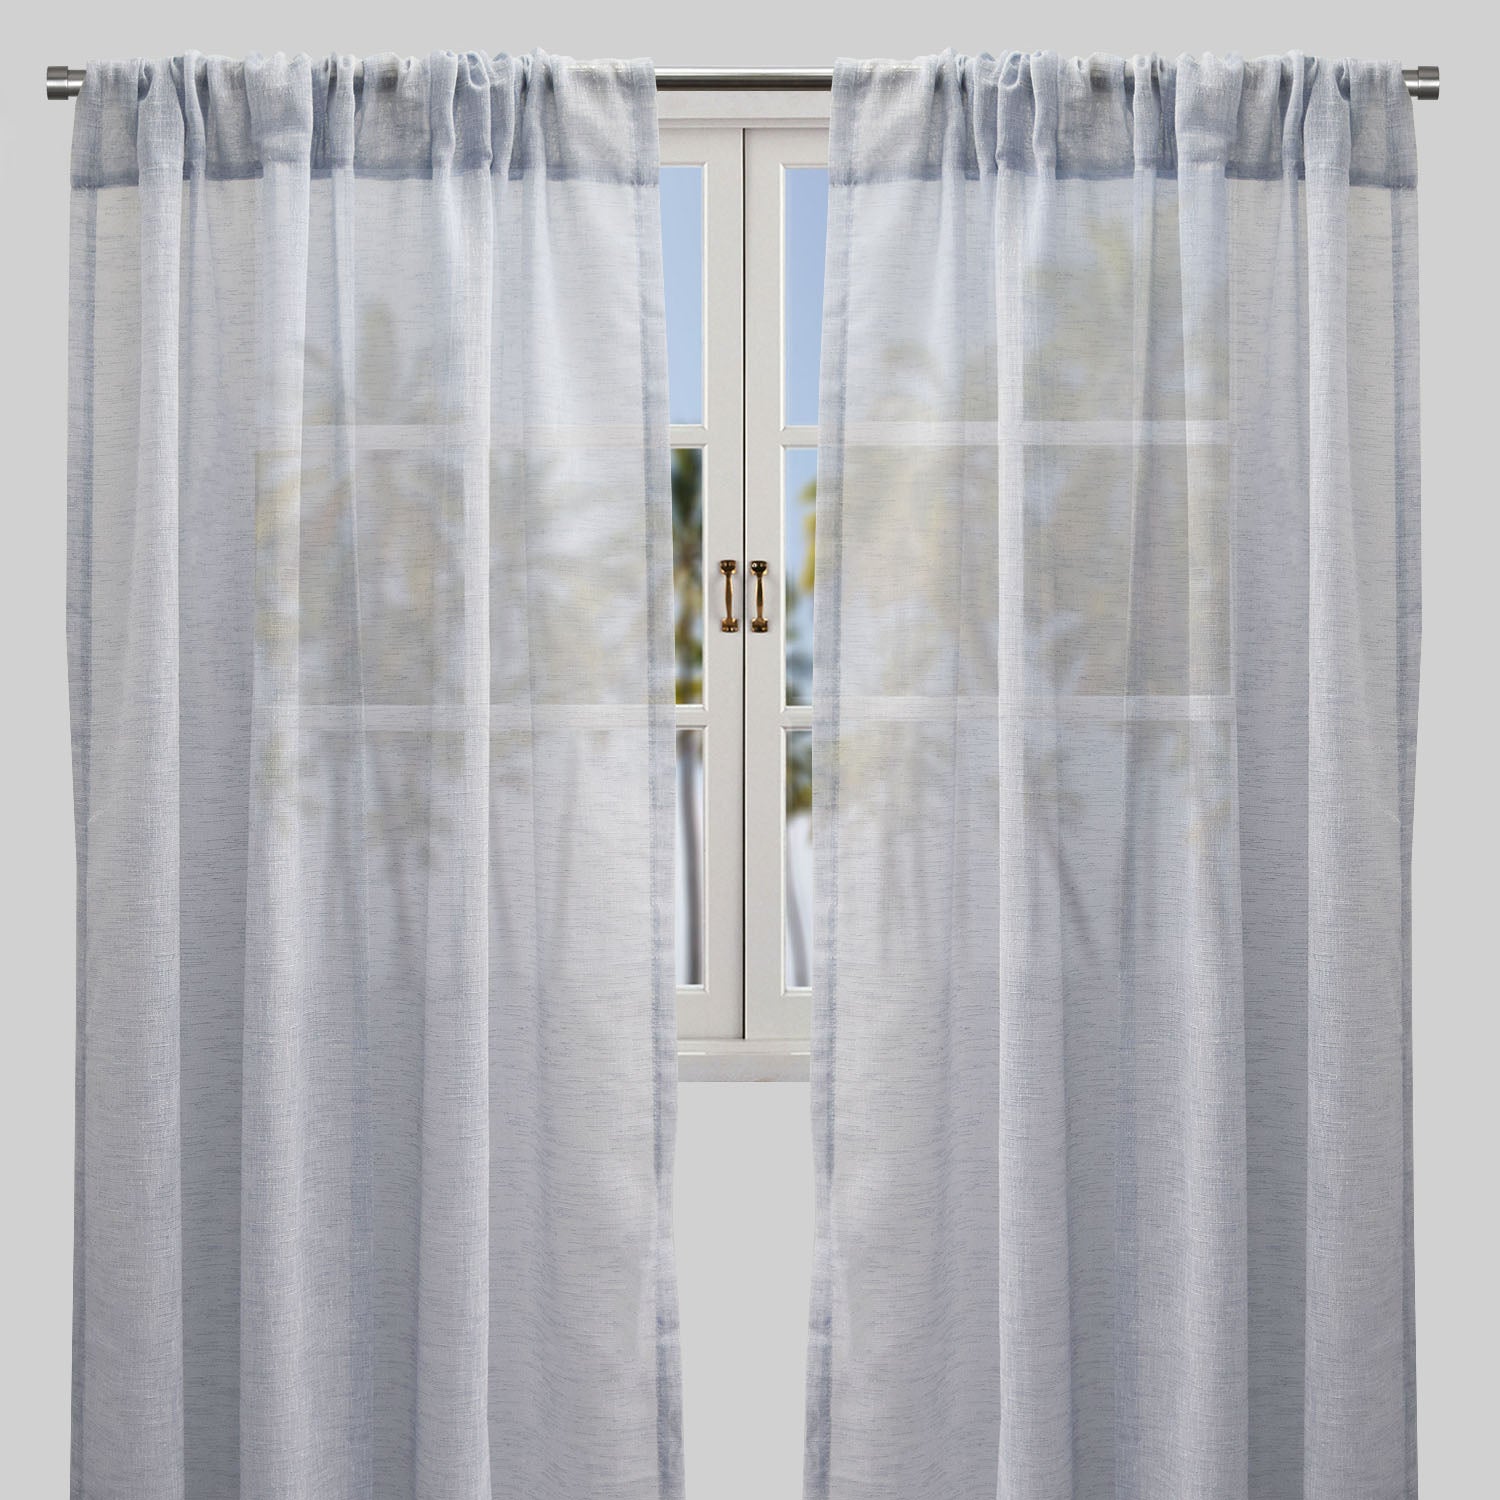 Champion Curtain Panels | Two-Toned Metallic Sheer